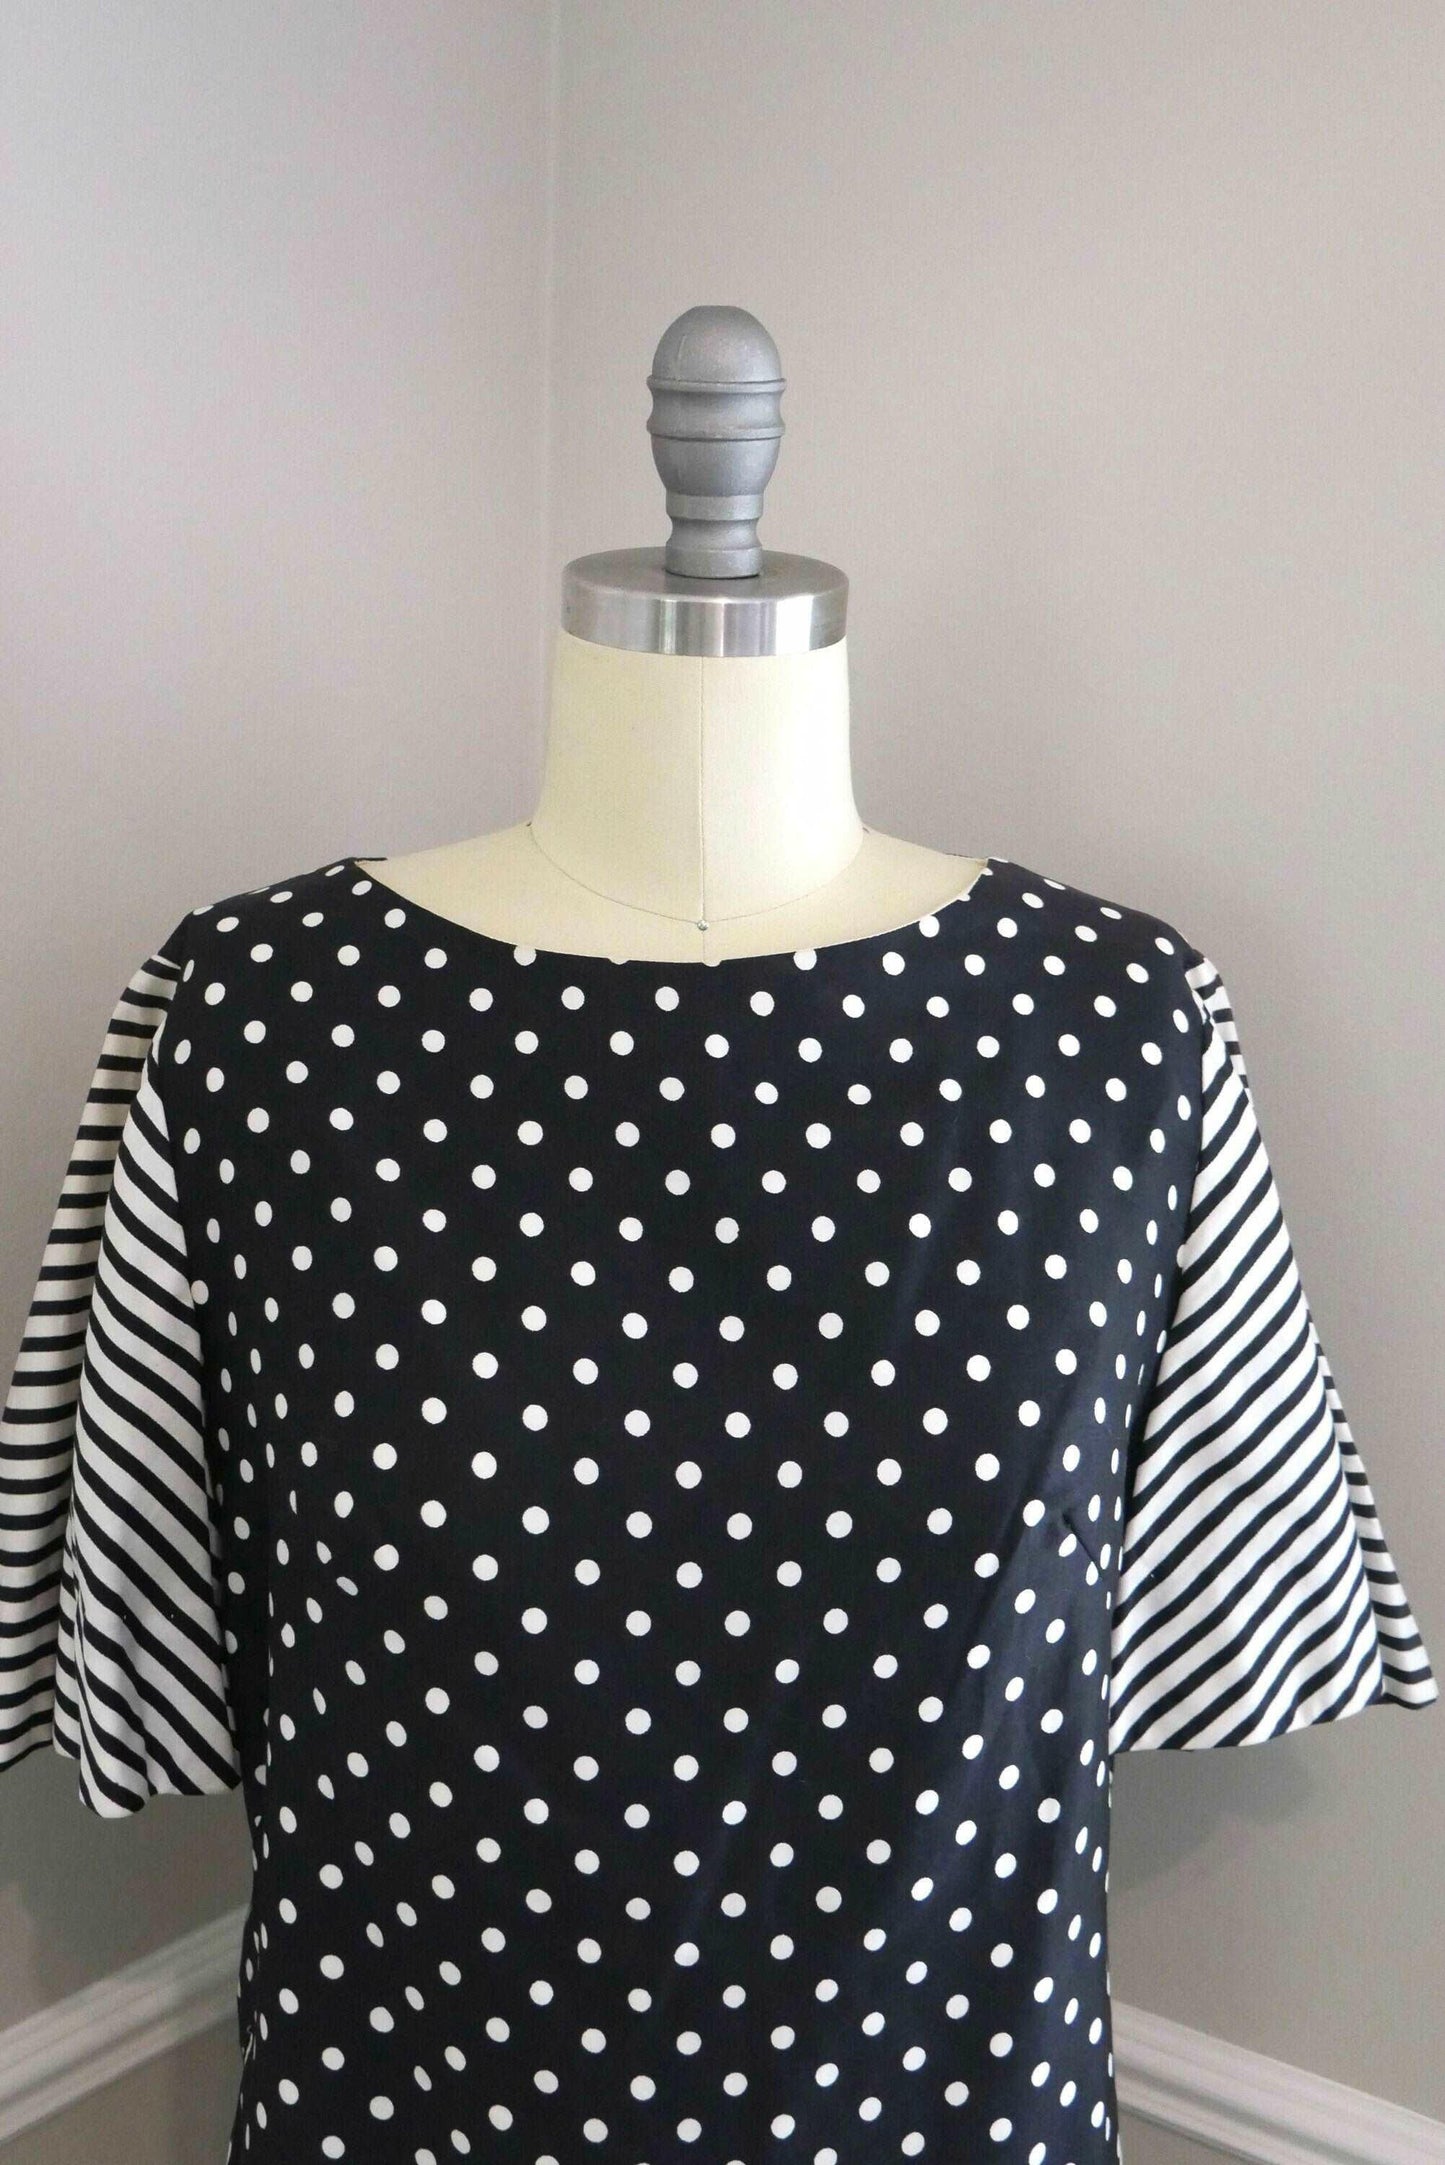 ON SALE Vintage 1960s Polka Dot Blouse / 60s retro button back blouse size S M